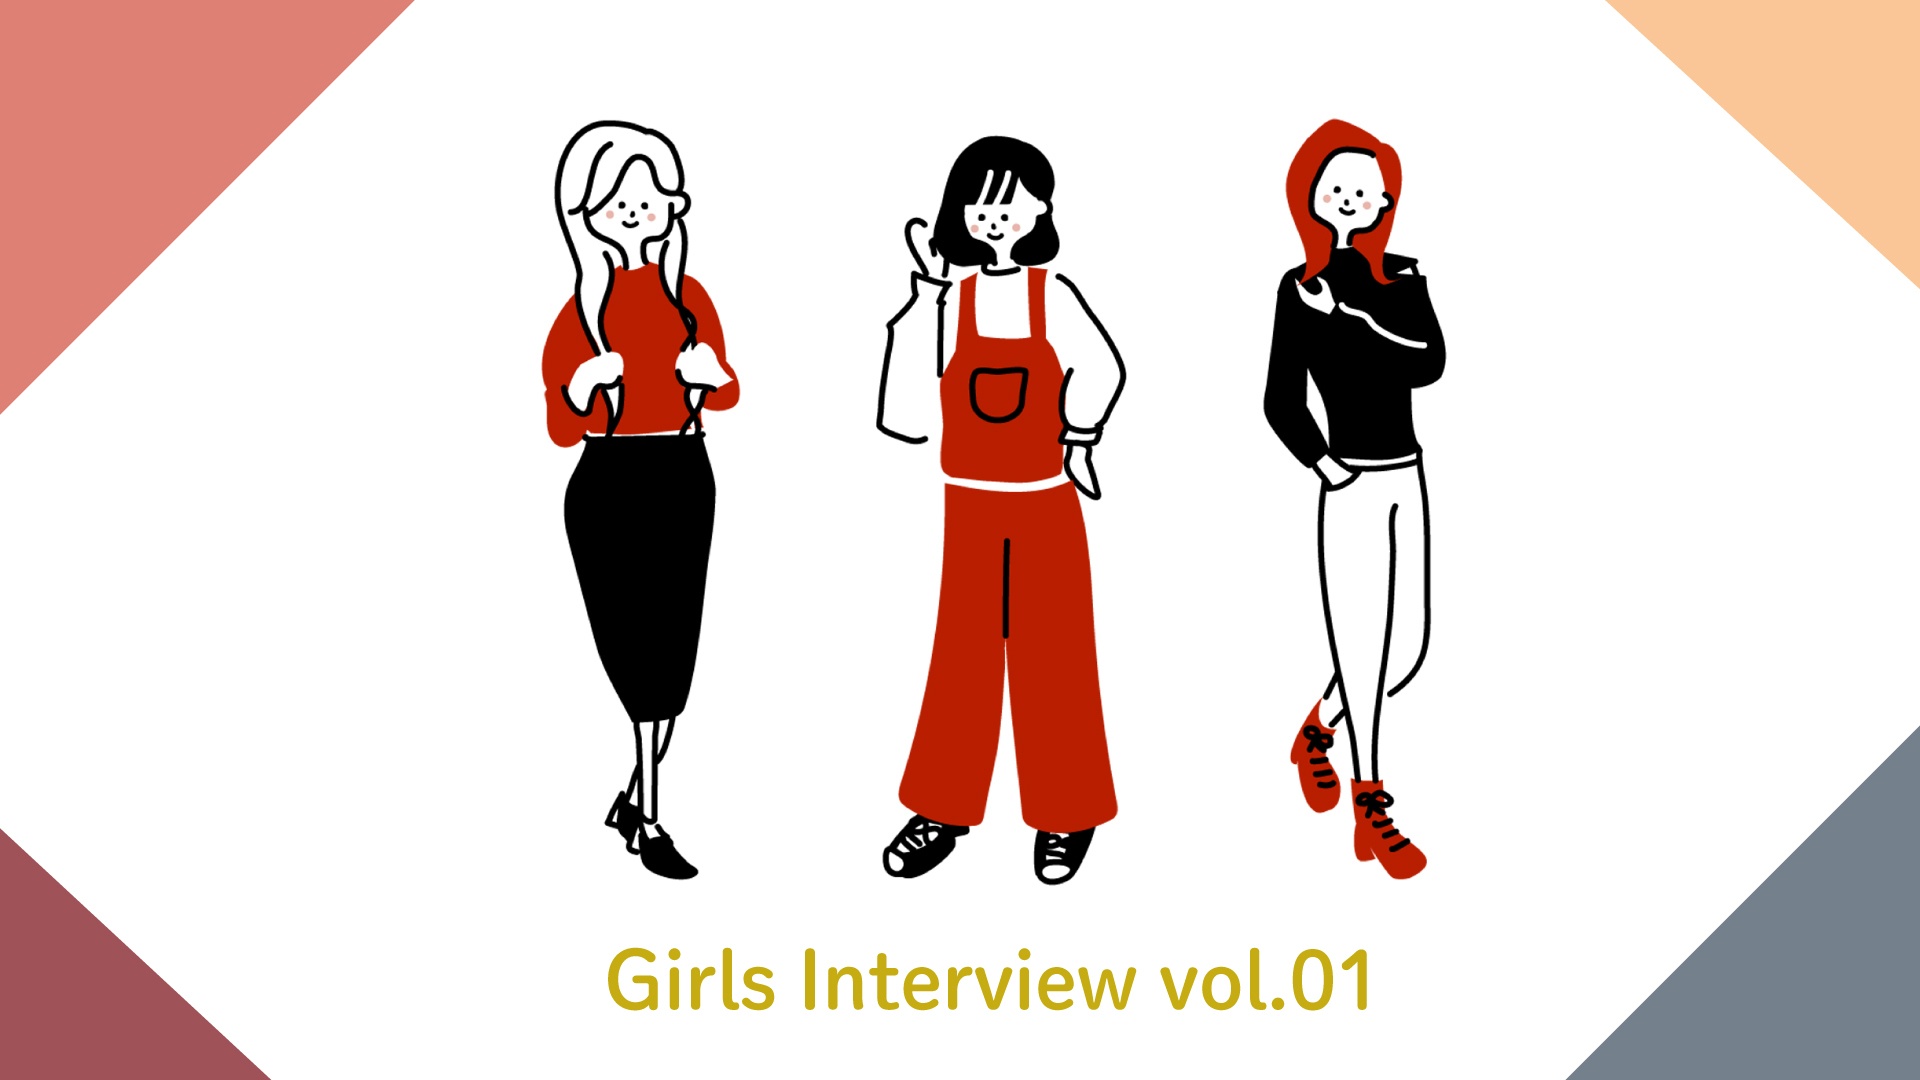 azblob://2022/11/11/eyecatch/2021-09-22-new-recruits-girls-interview01-000-1.jpg